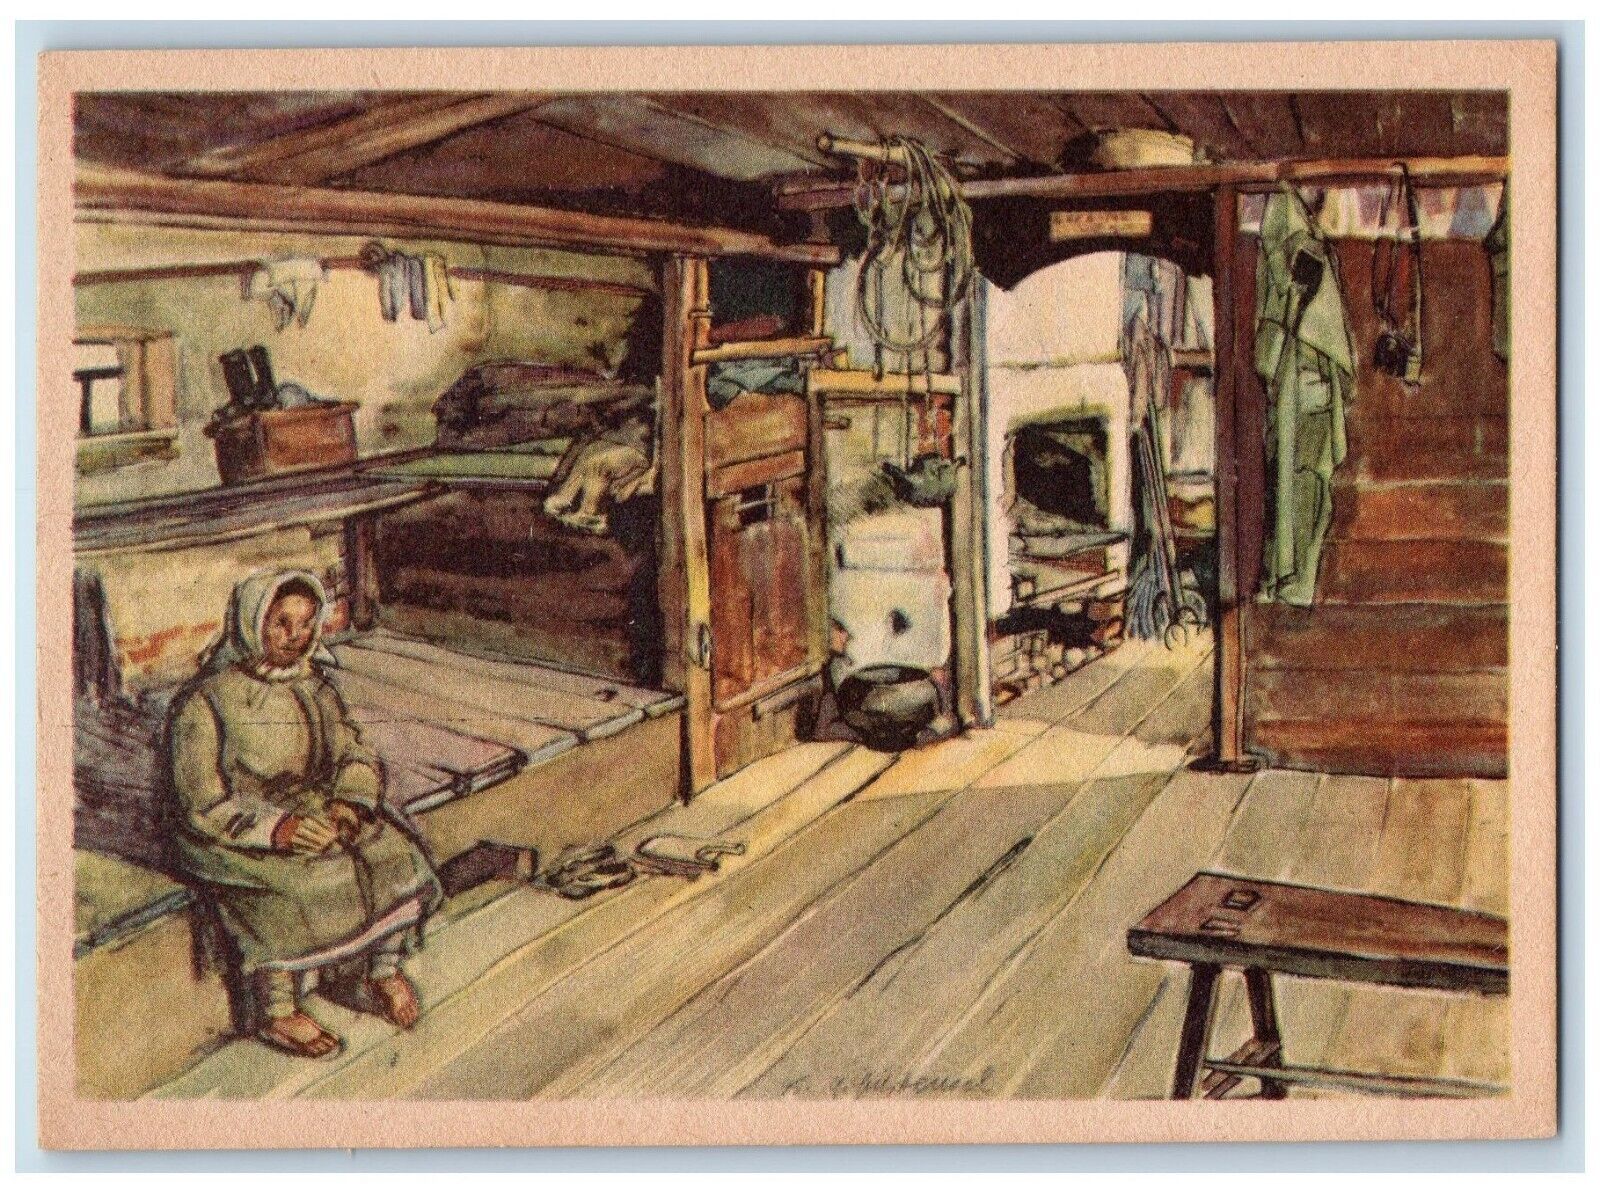 WW2 Germany Soldier Peasant Hut USSR Russia Henser Artist Vintage Postcard